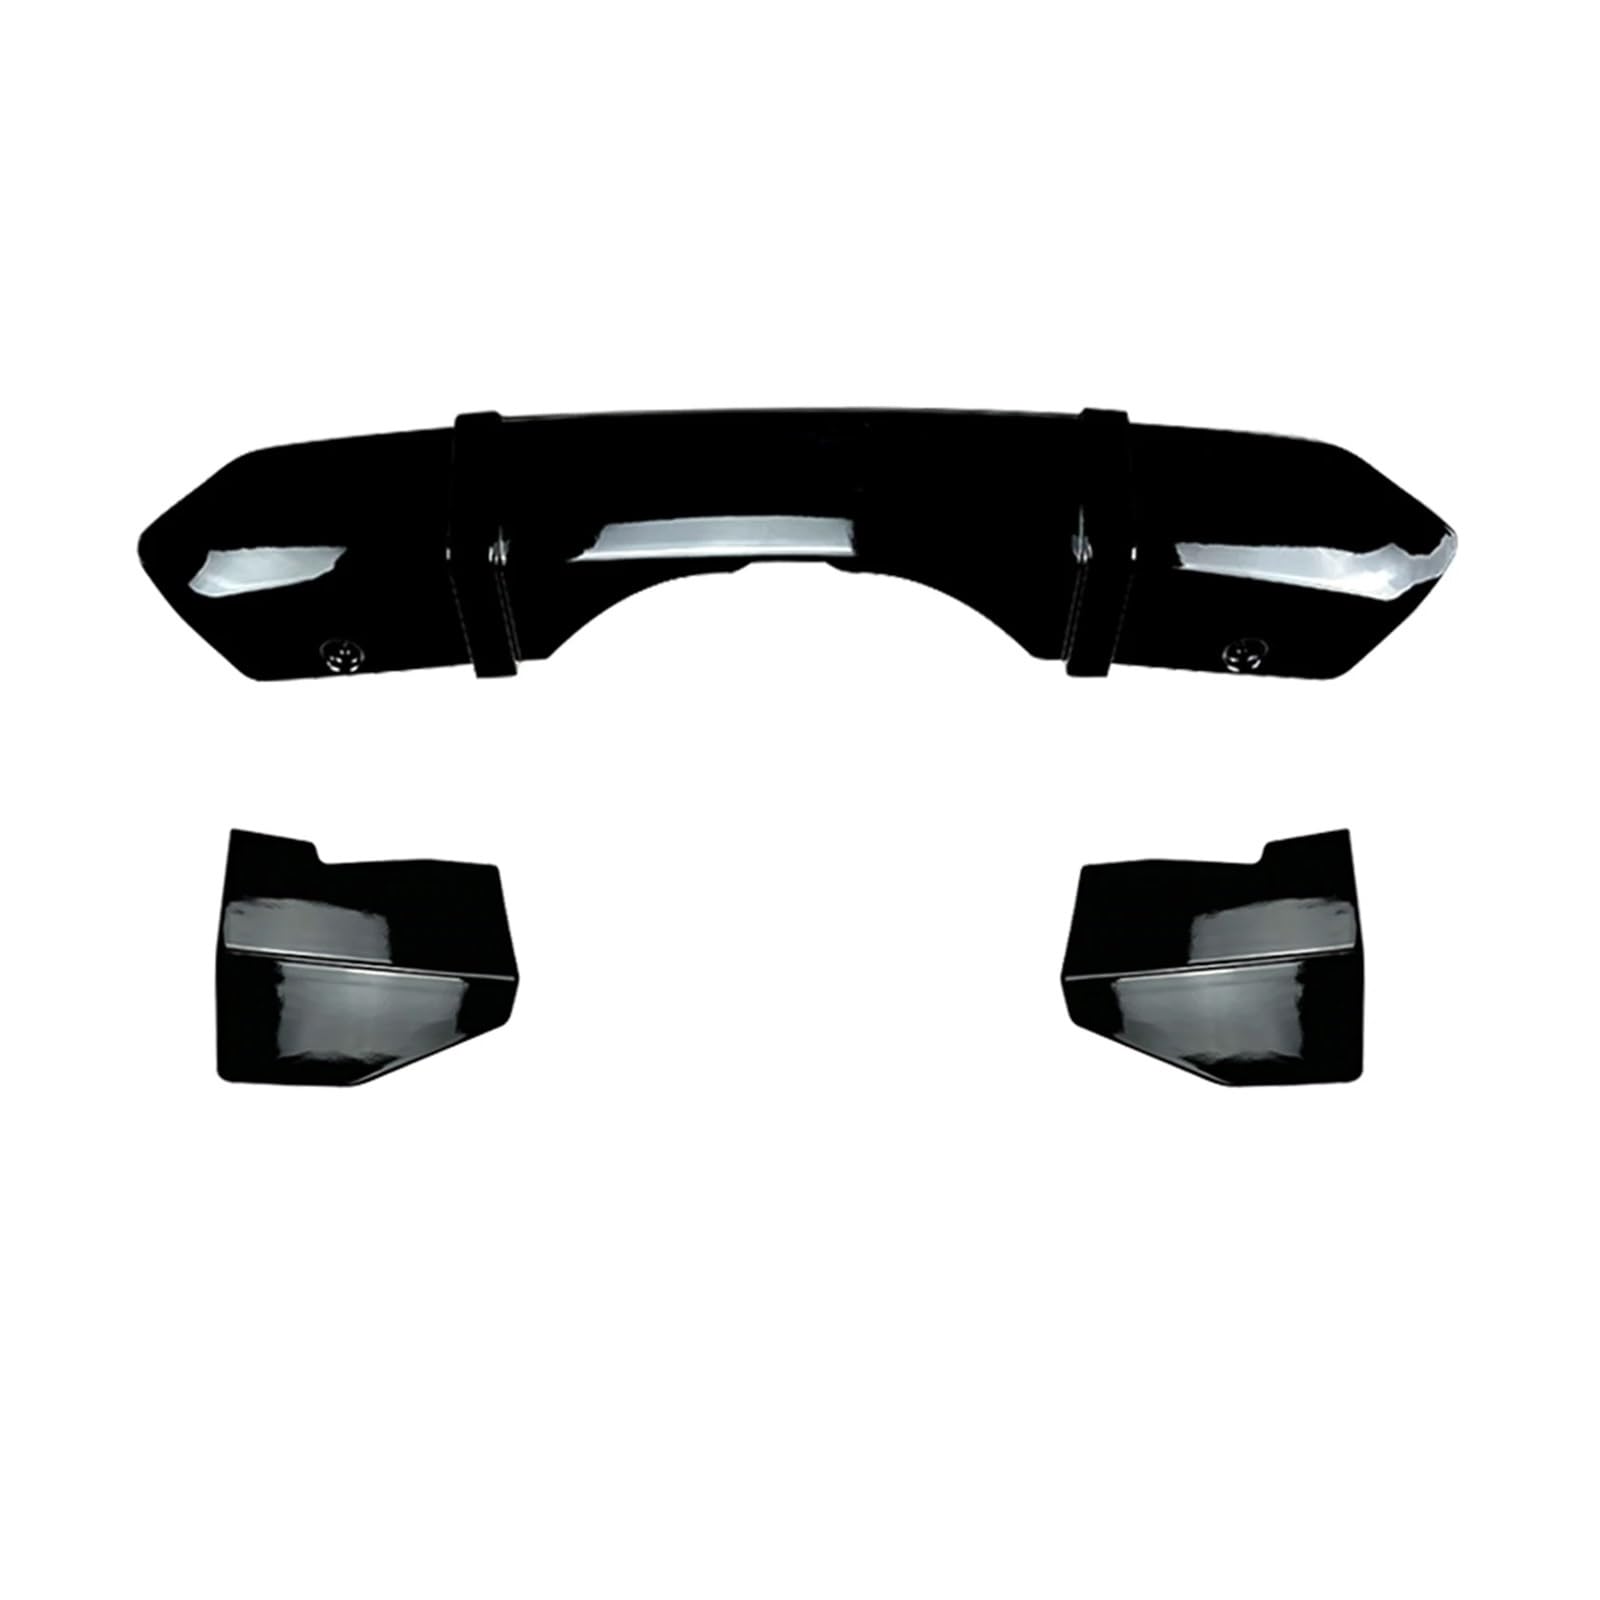 Auto Heckstoßstangendiffusor Lippenschutz Splitter Kompatibel for BMW X5 F15 M Sport 2014 2015 2016 2017 2018(Gloss Black) von KDMOWHON